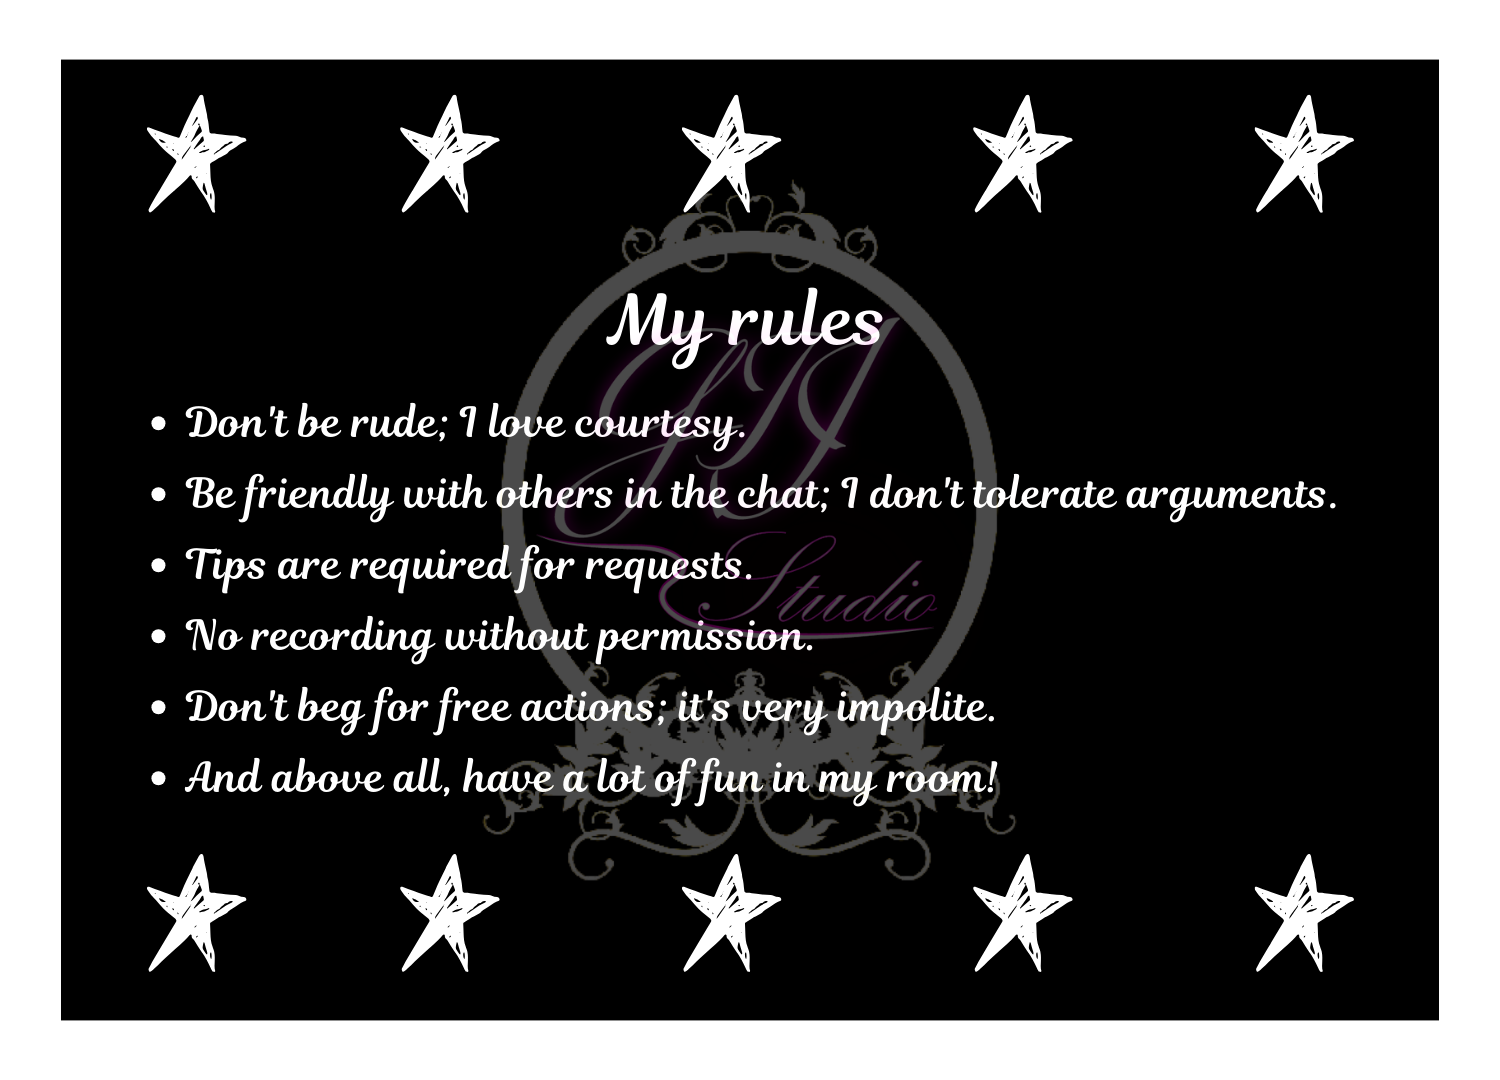 Sweet1mili My Rules image: 1